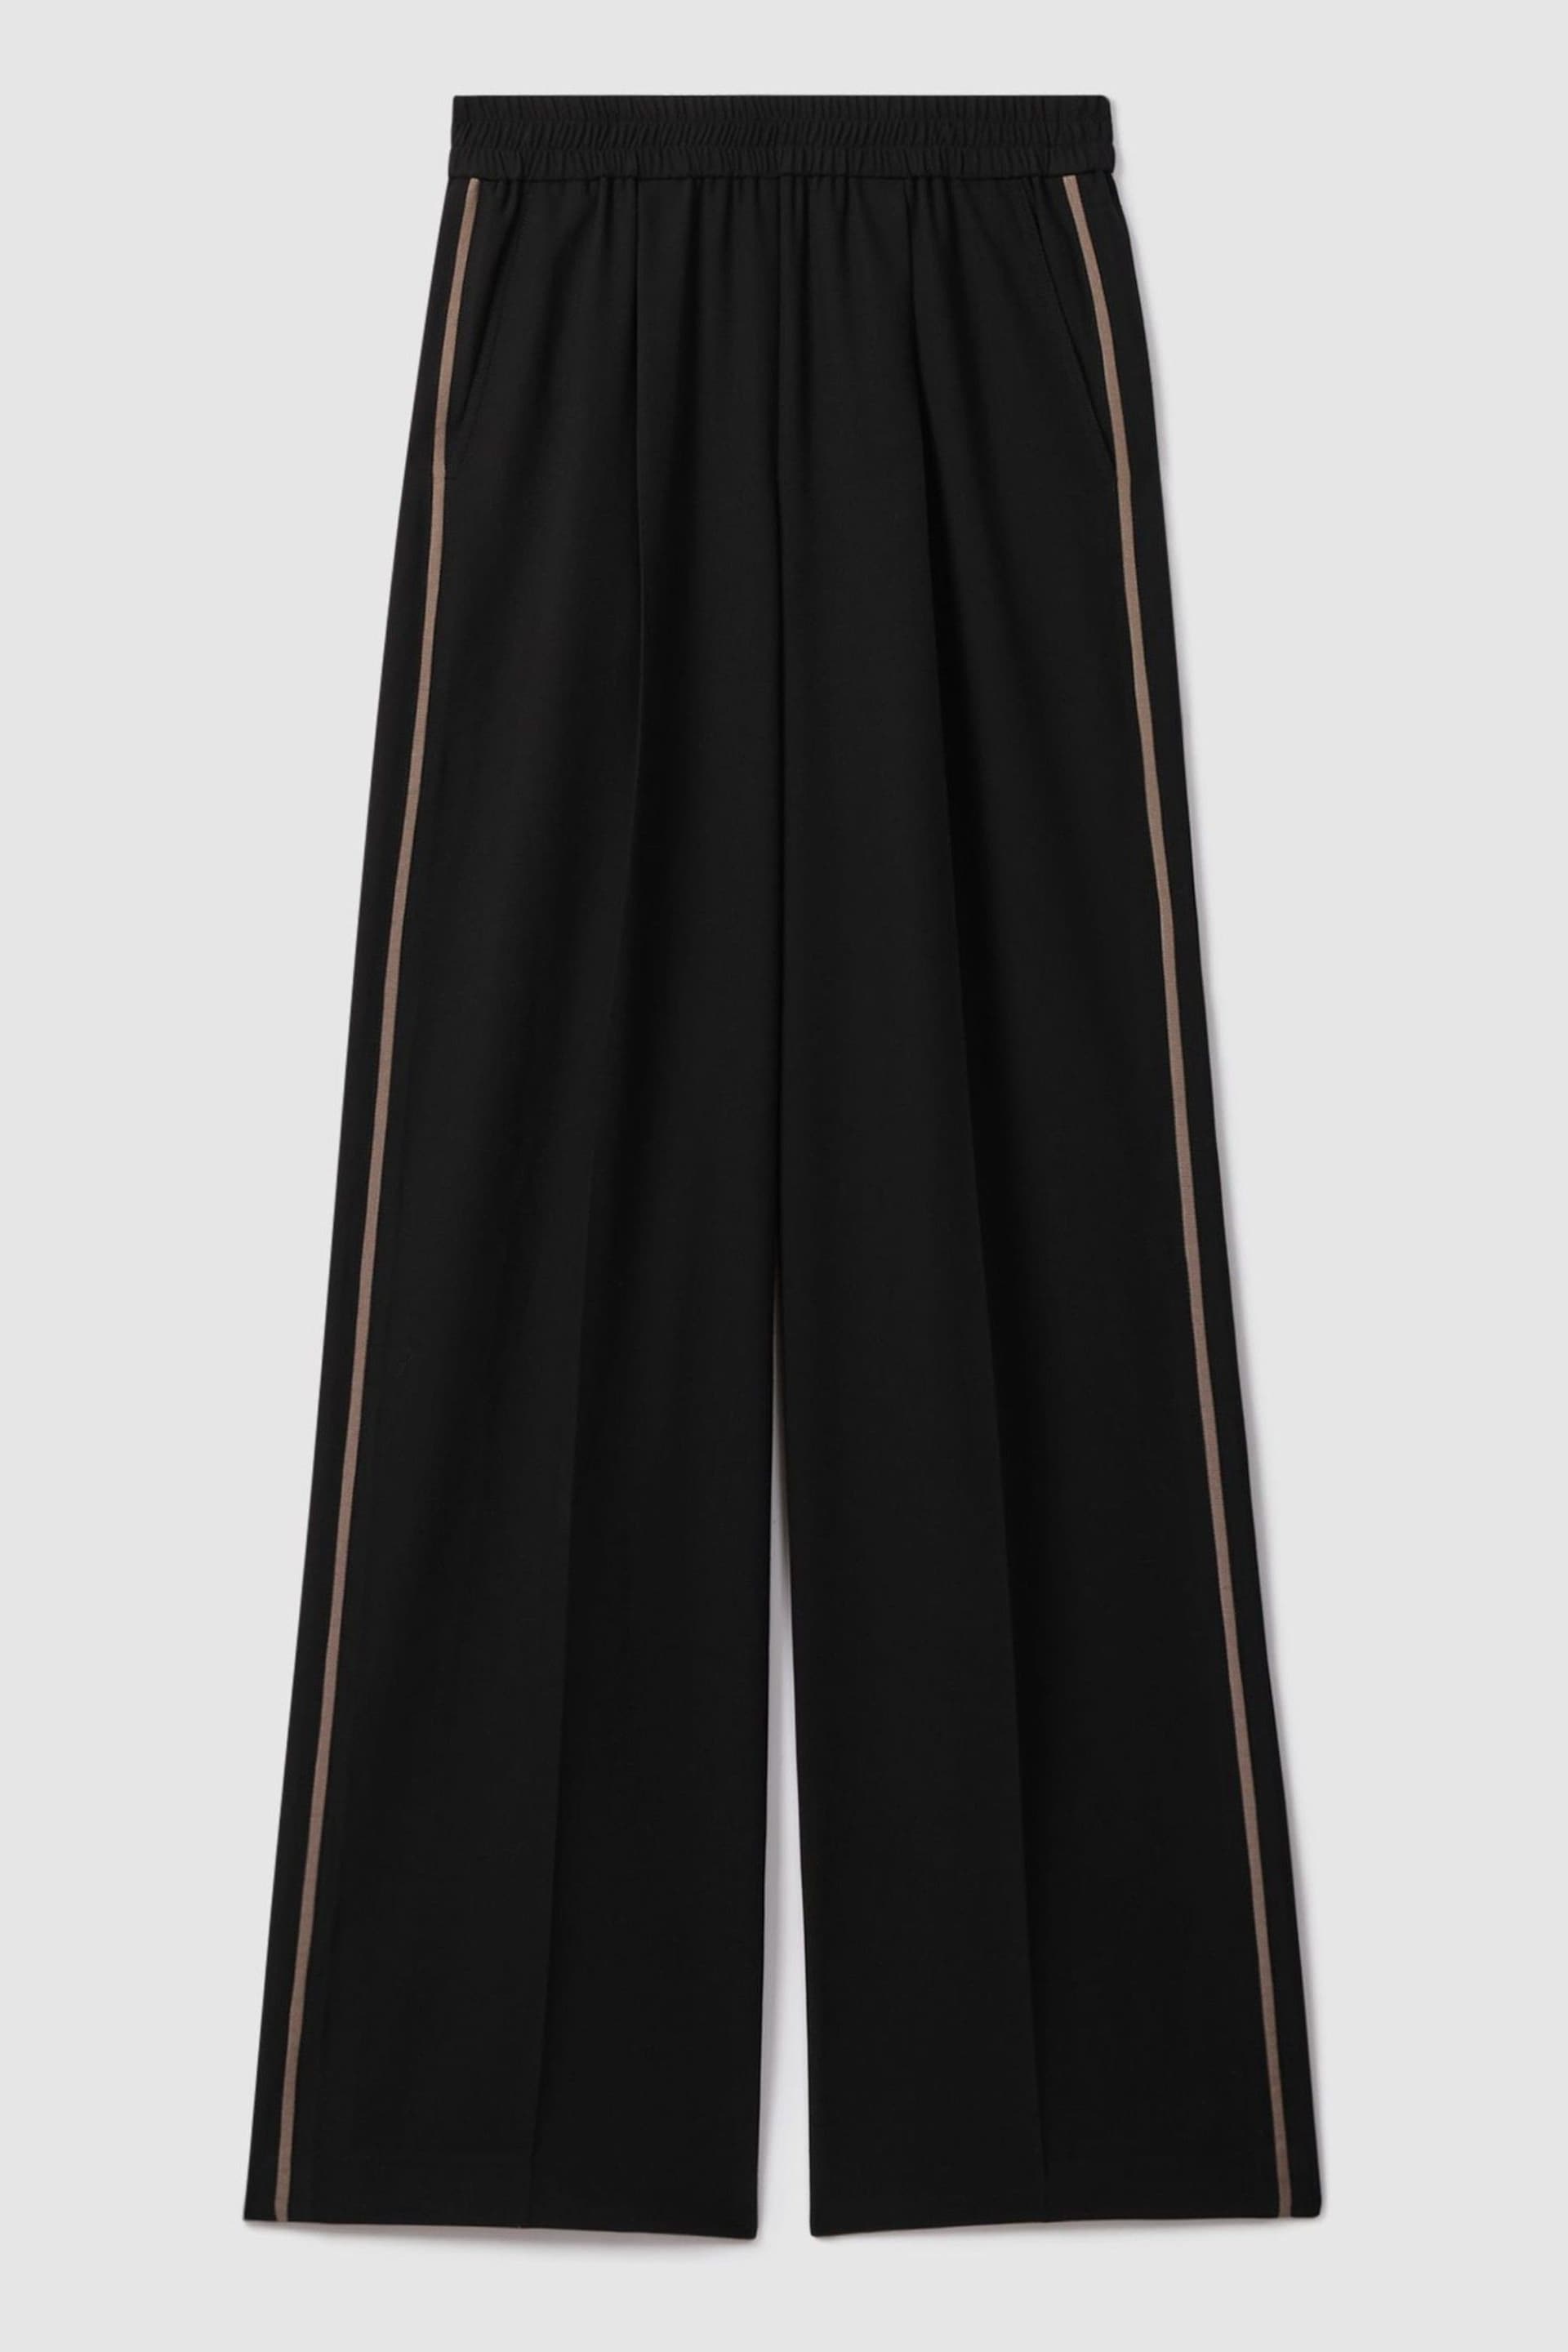 Reiss Black Remi Petite Elasticated Side Stripe Trousers - Image 2 of 8